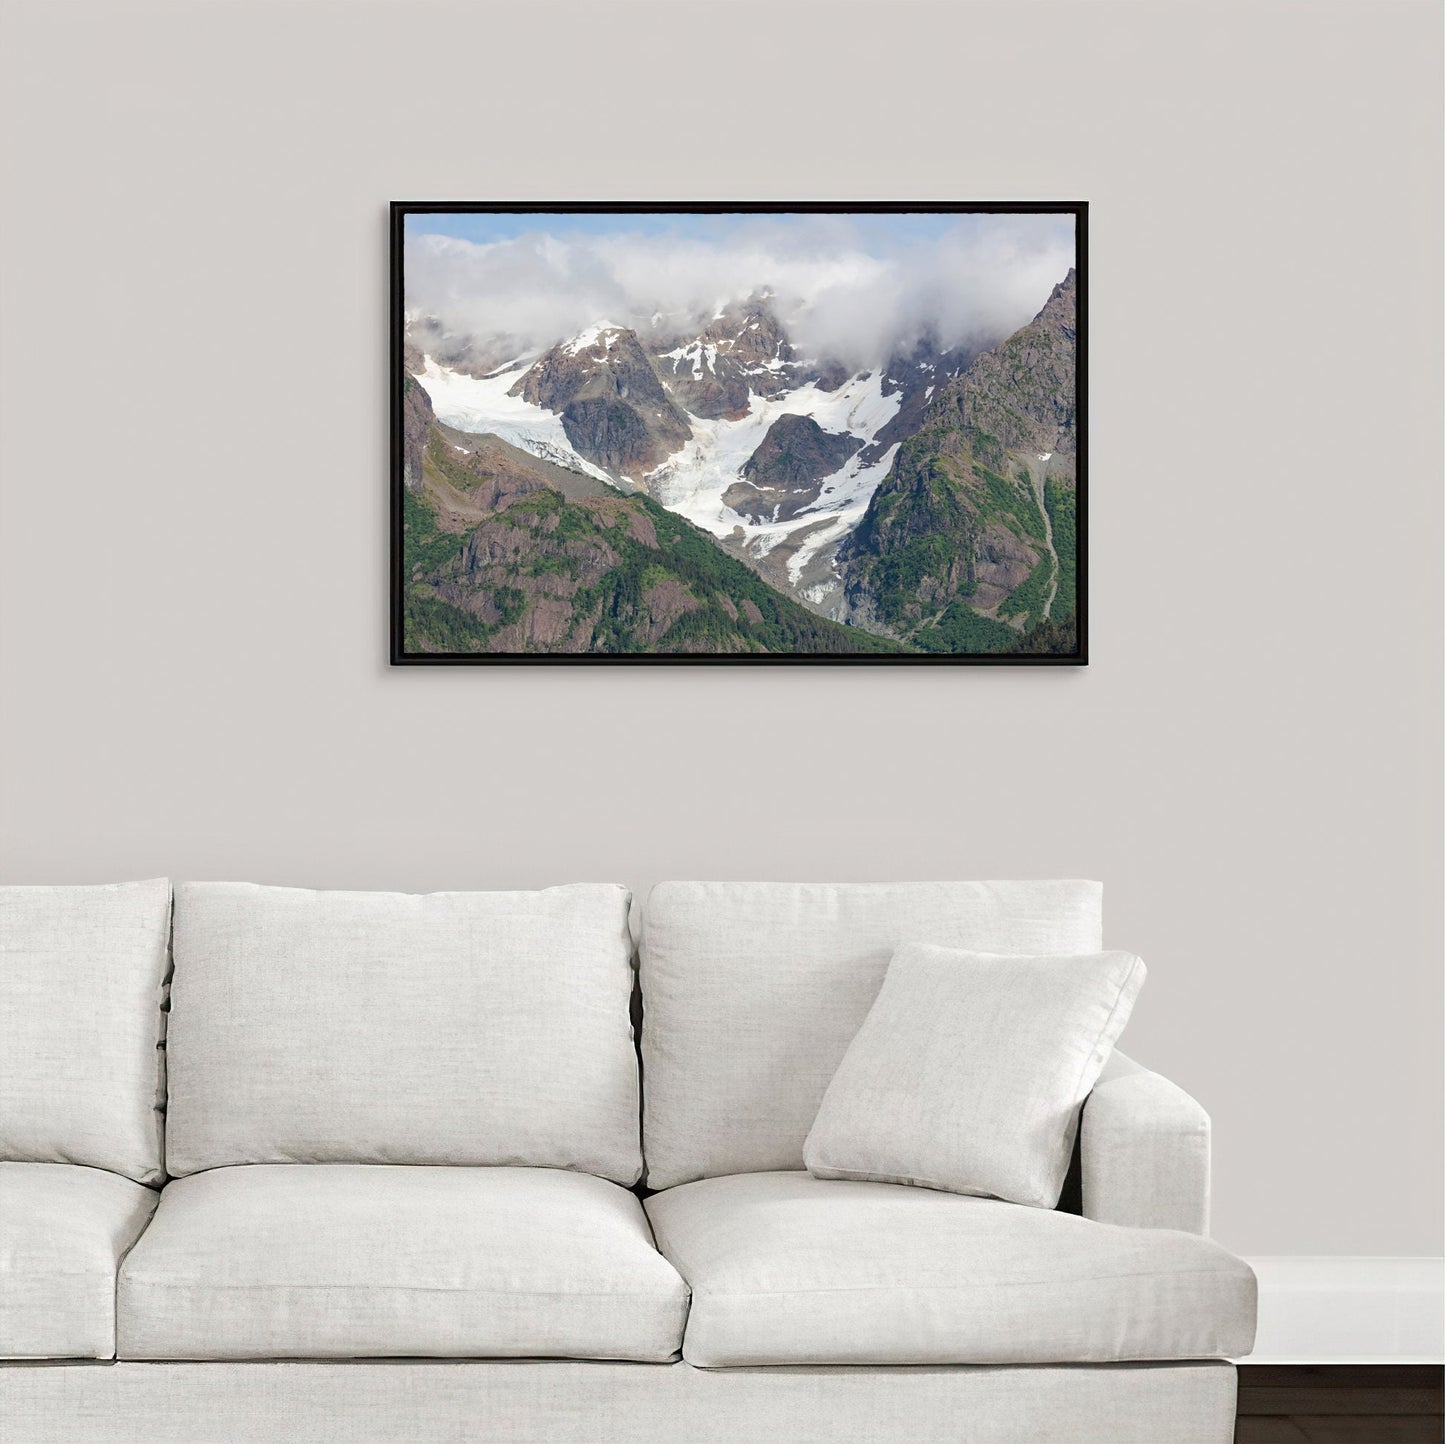 Alaska print, Kenai Peninsula photo, Seward wall art, Alaska decor, mountain photography, large paper or canvas picture, 5x7 to 40x60"